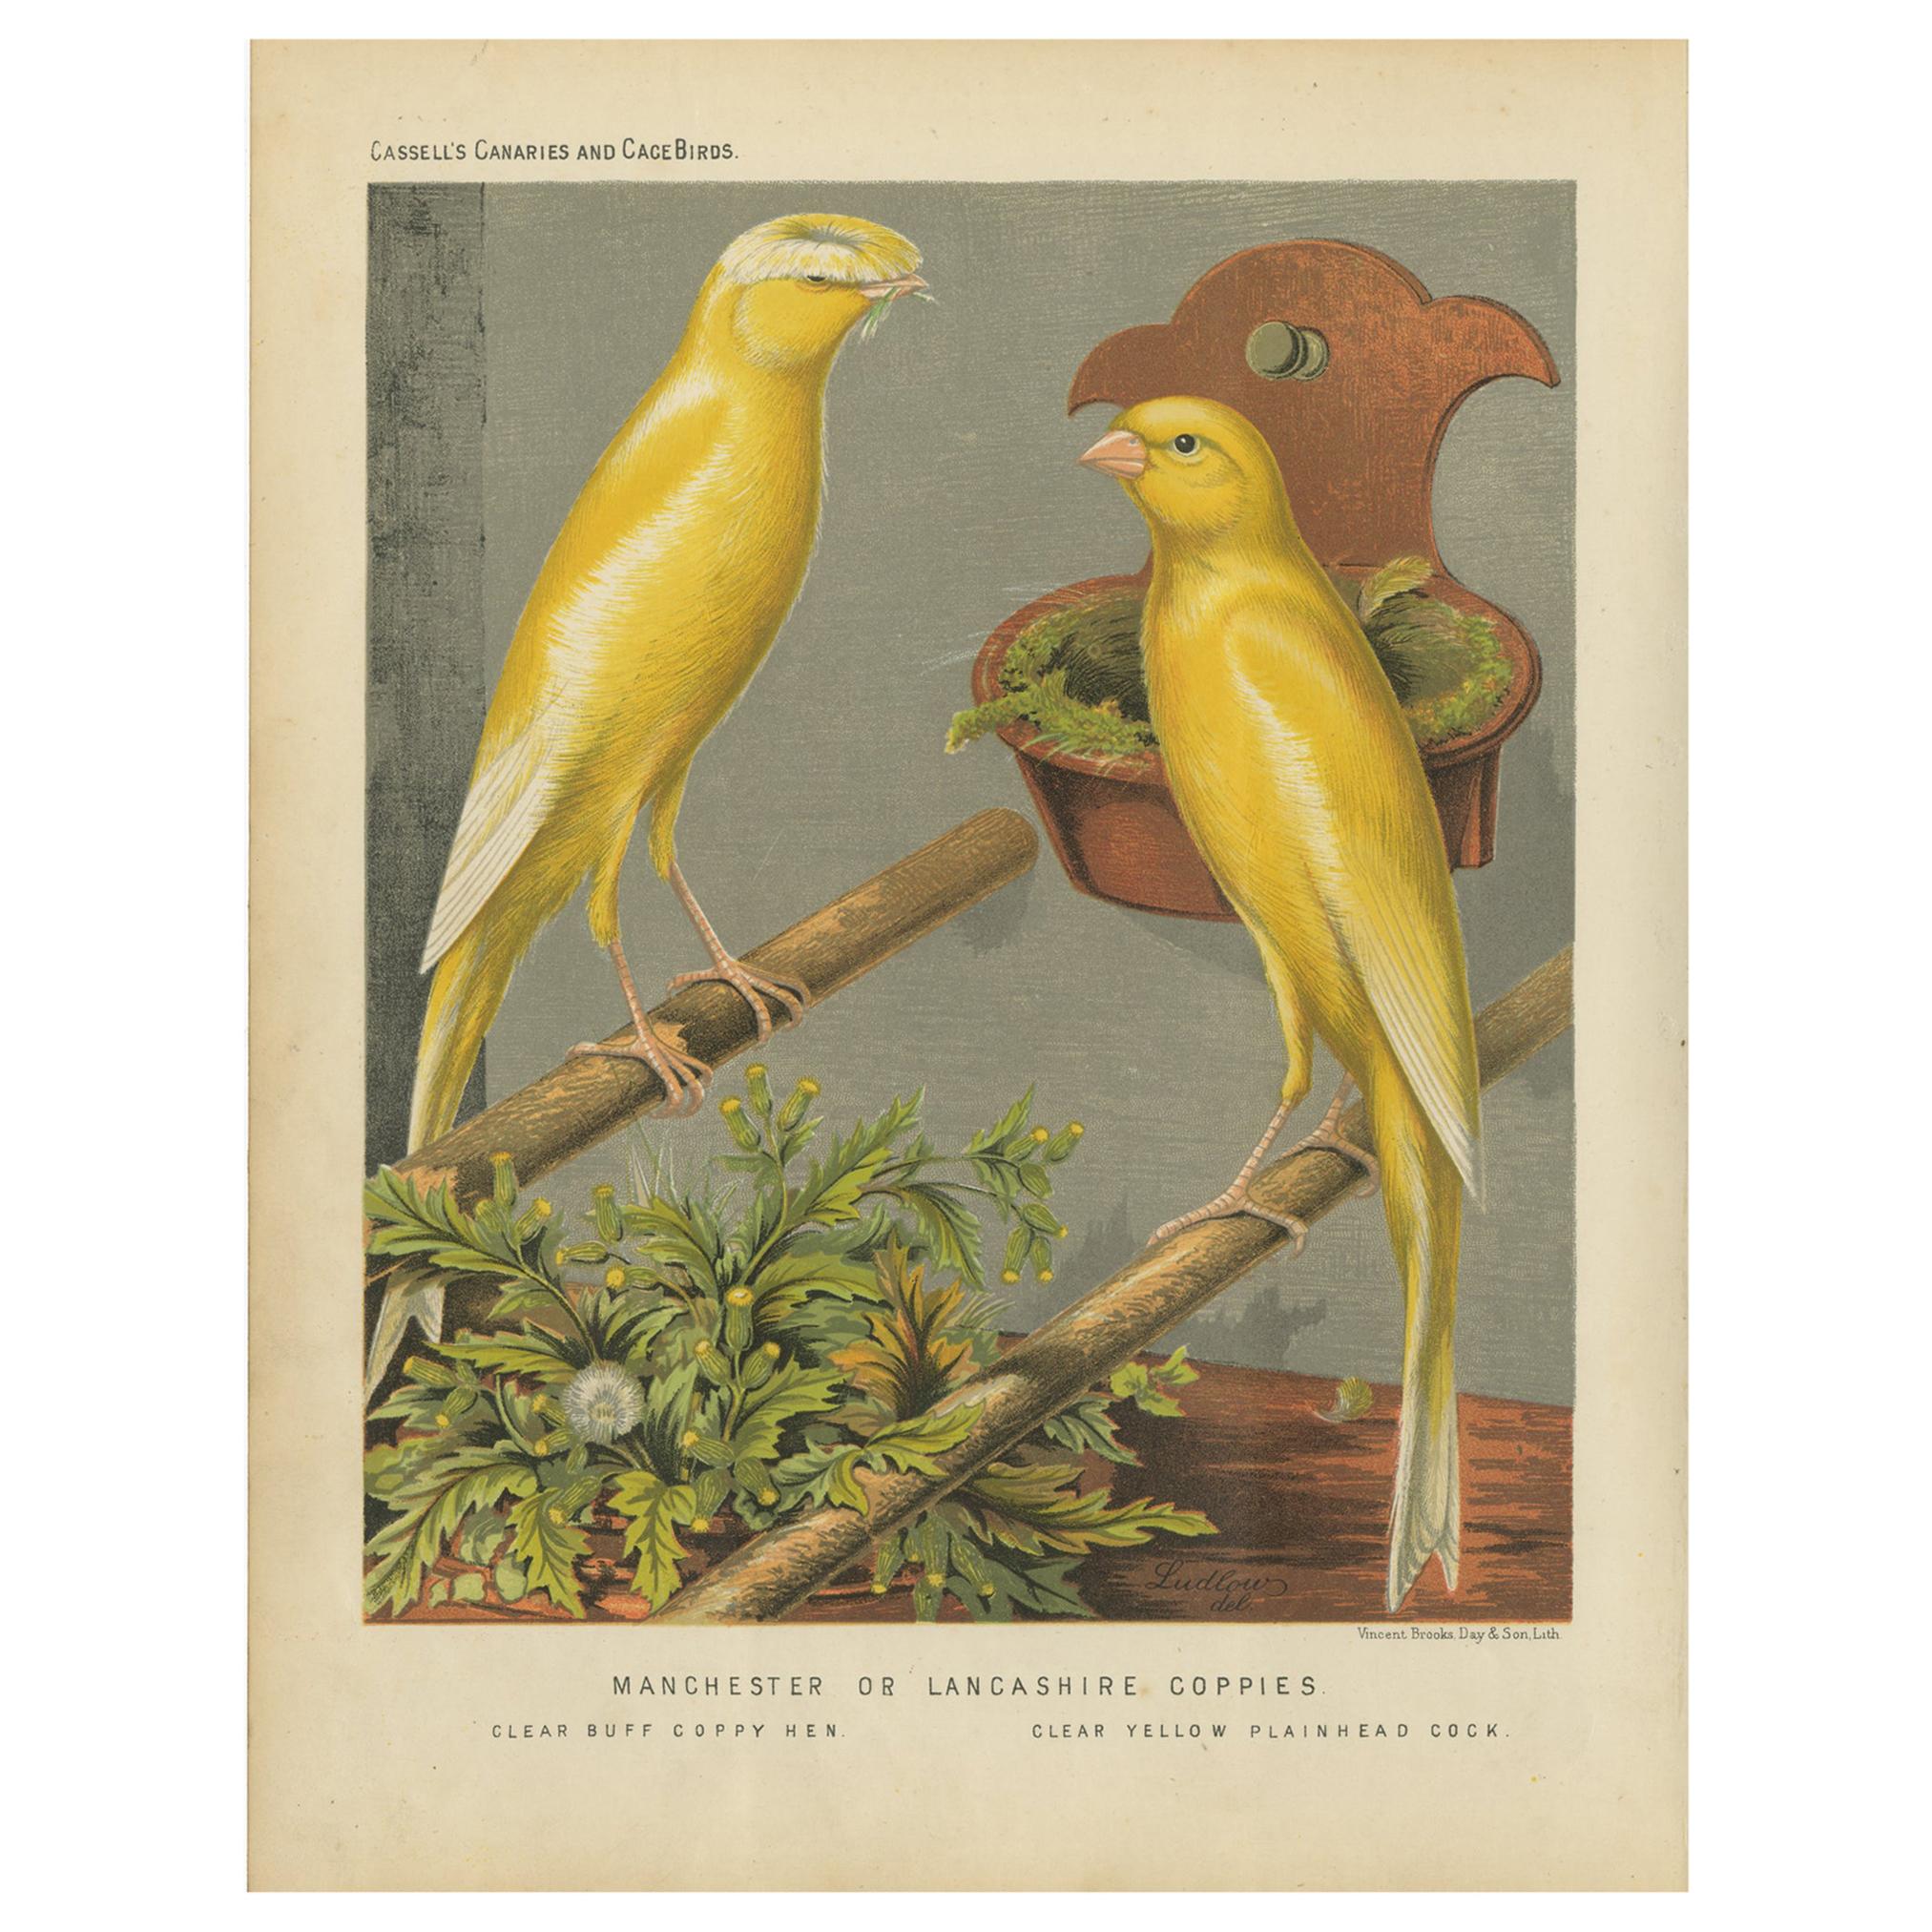 Antique Bird Print of the Manchester or Lancashire Coppies, circa 1880